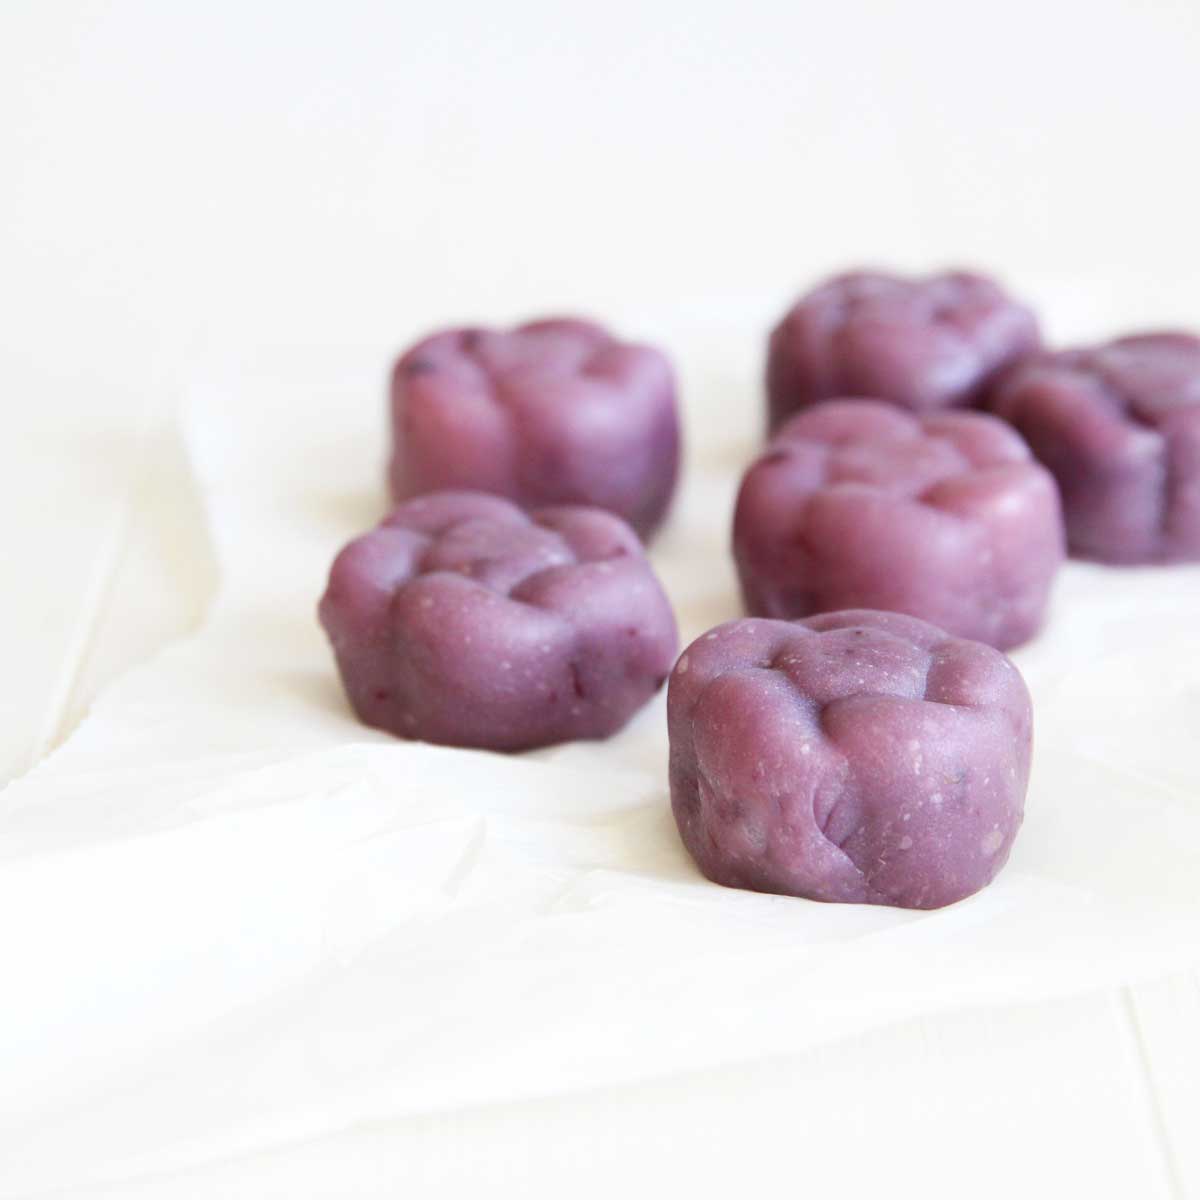 purple sweet potato ube snowskin mooncakes with ube filling